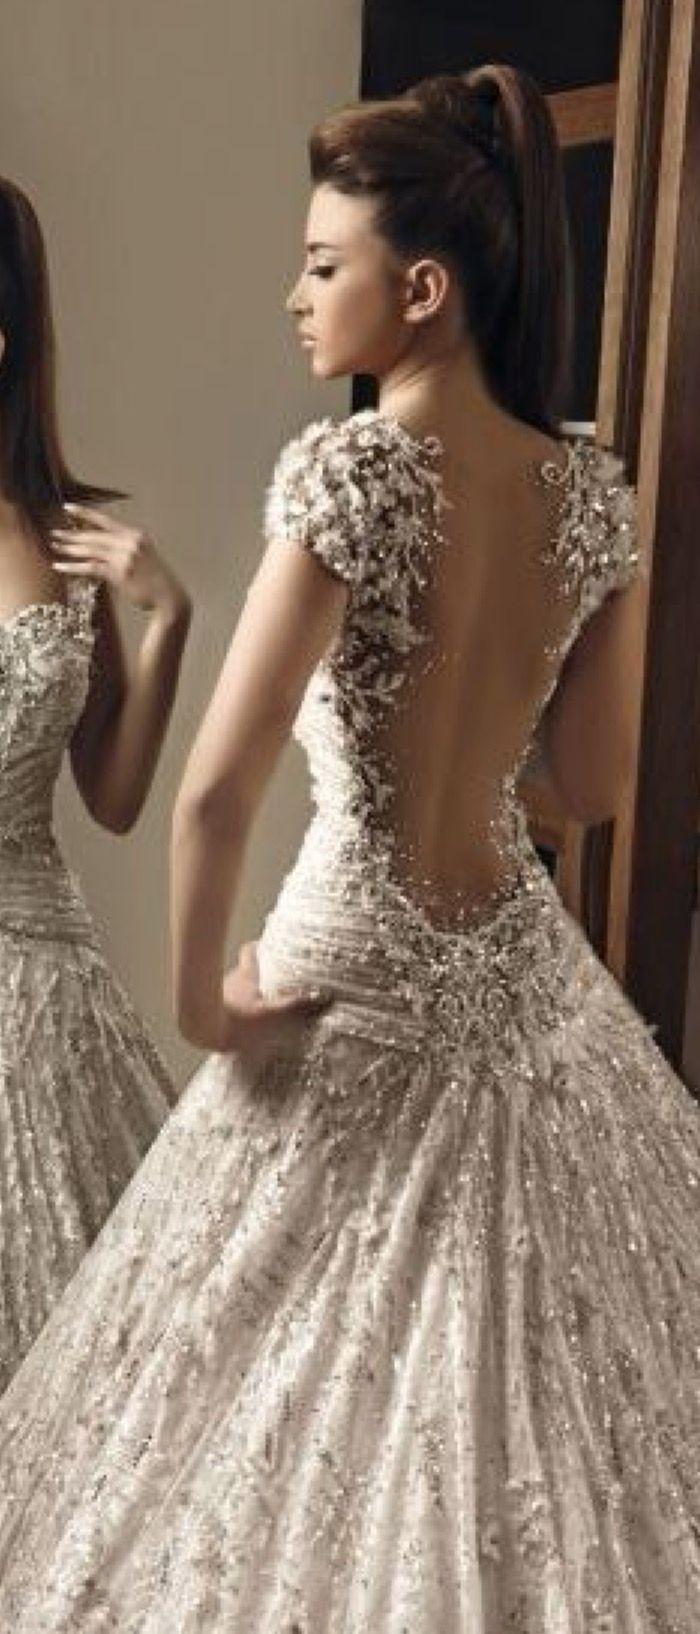 Wedding - Dresses, Dresses And More Dresses!!!